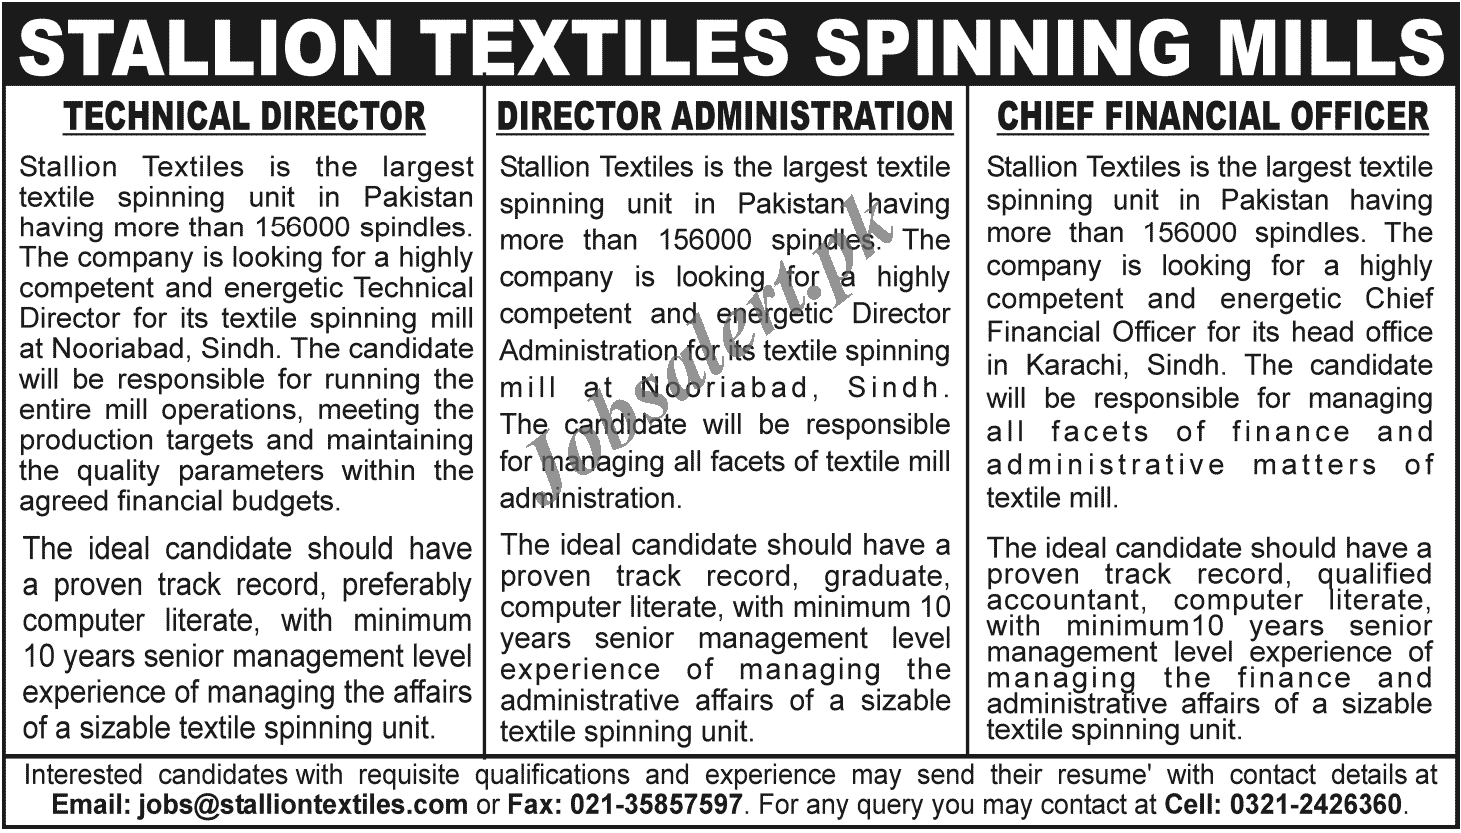 Technical Director Jobs in Stallion Textiles Spinning Mills Karachi